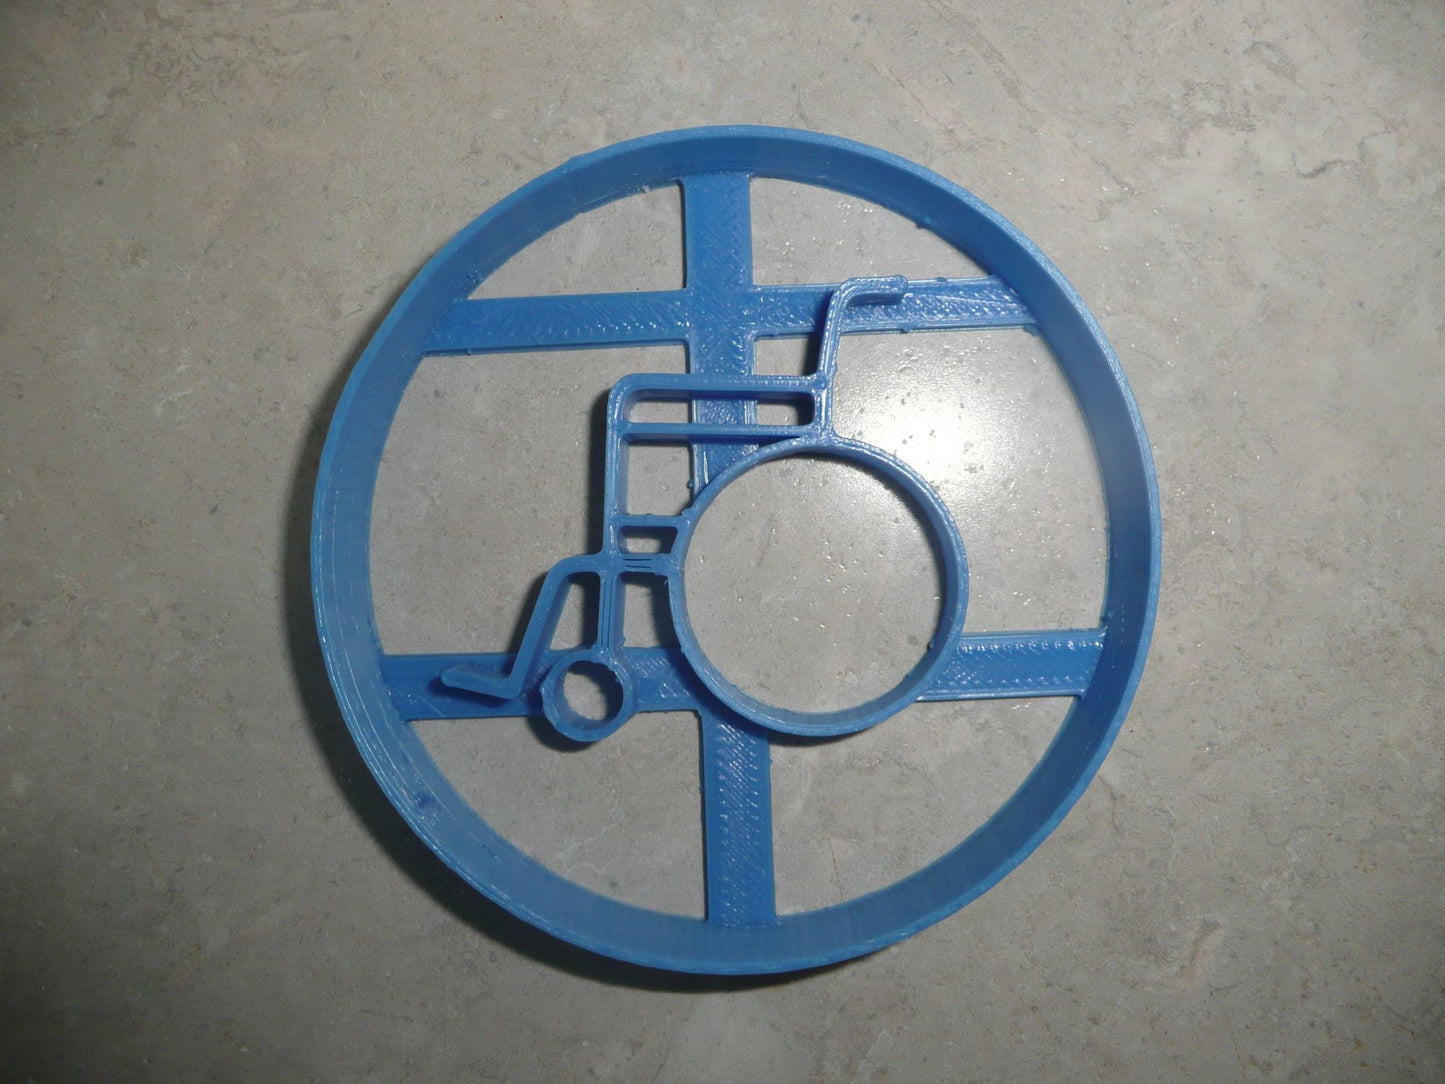 6x Wheelchair Medical Fondant Cutter Cupcake Topper Size 1.75 Inch USA FD3791